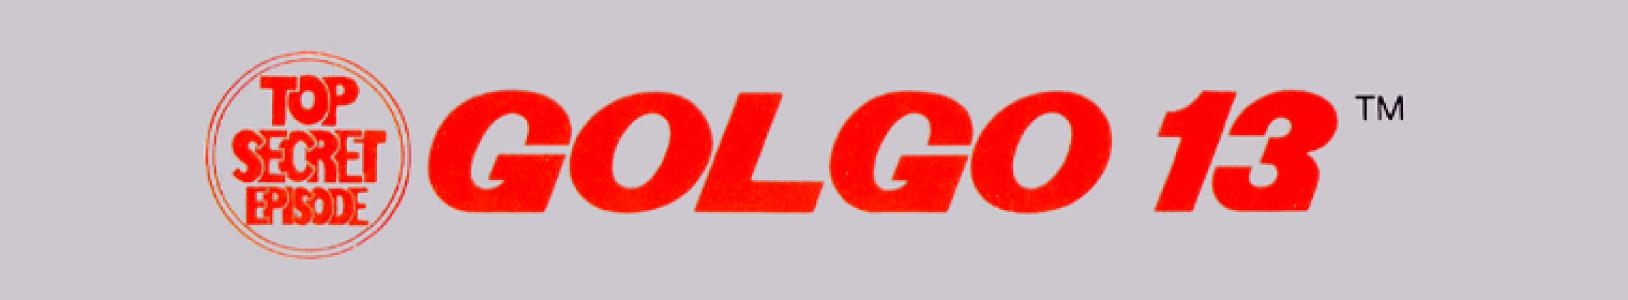 Golgo 13: Top Secret Episode banner